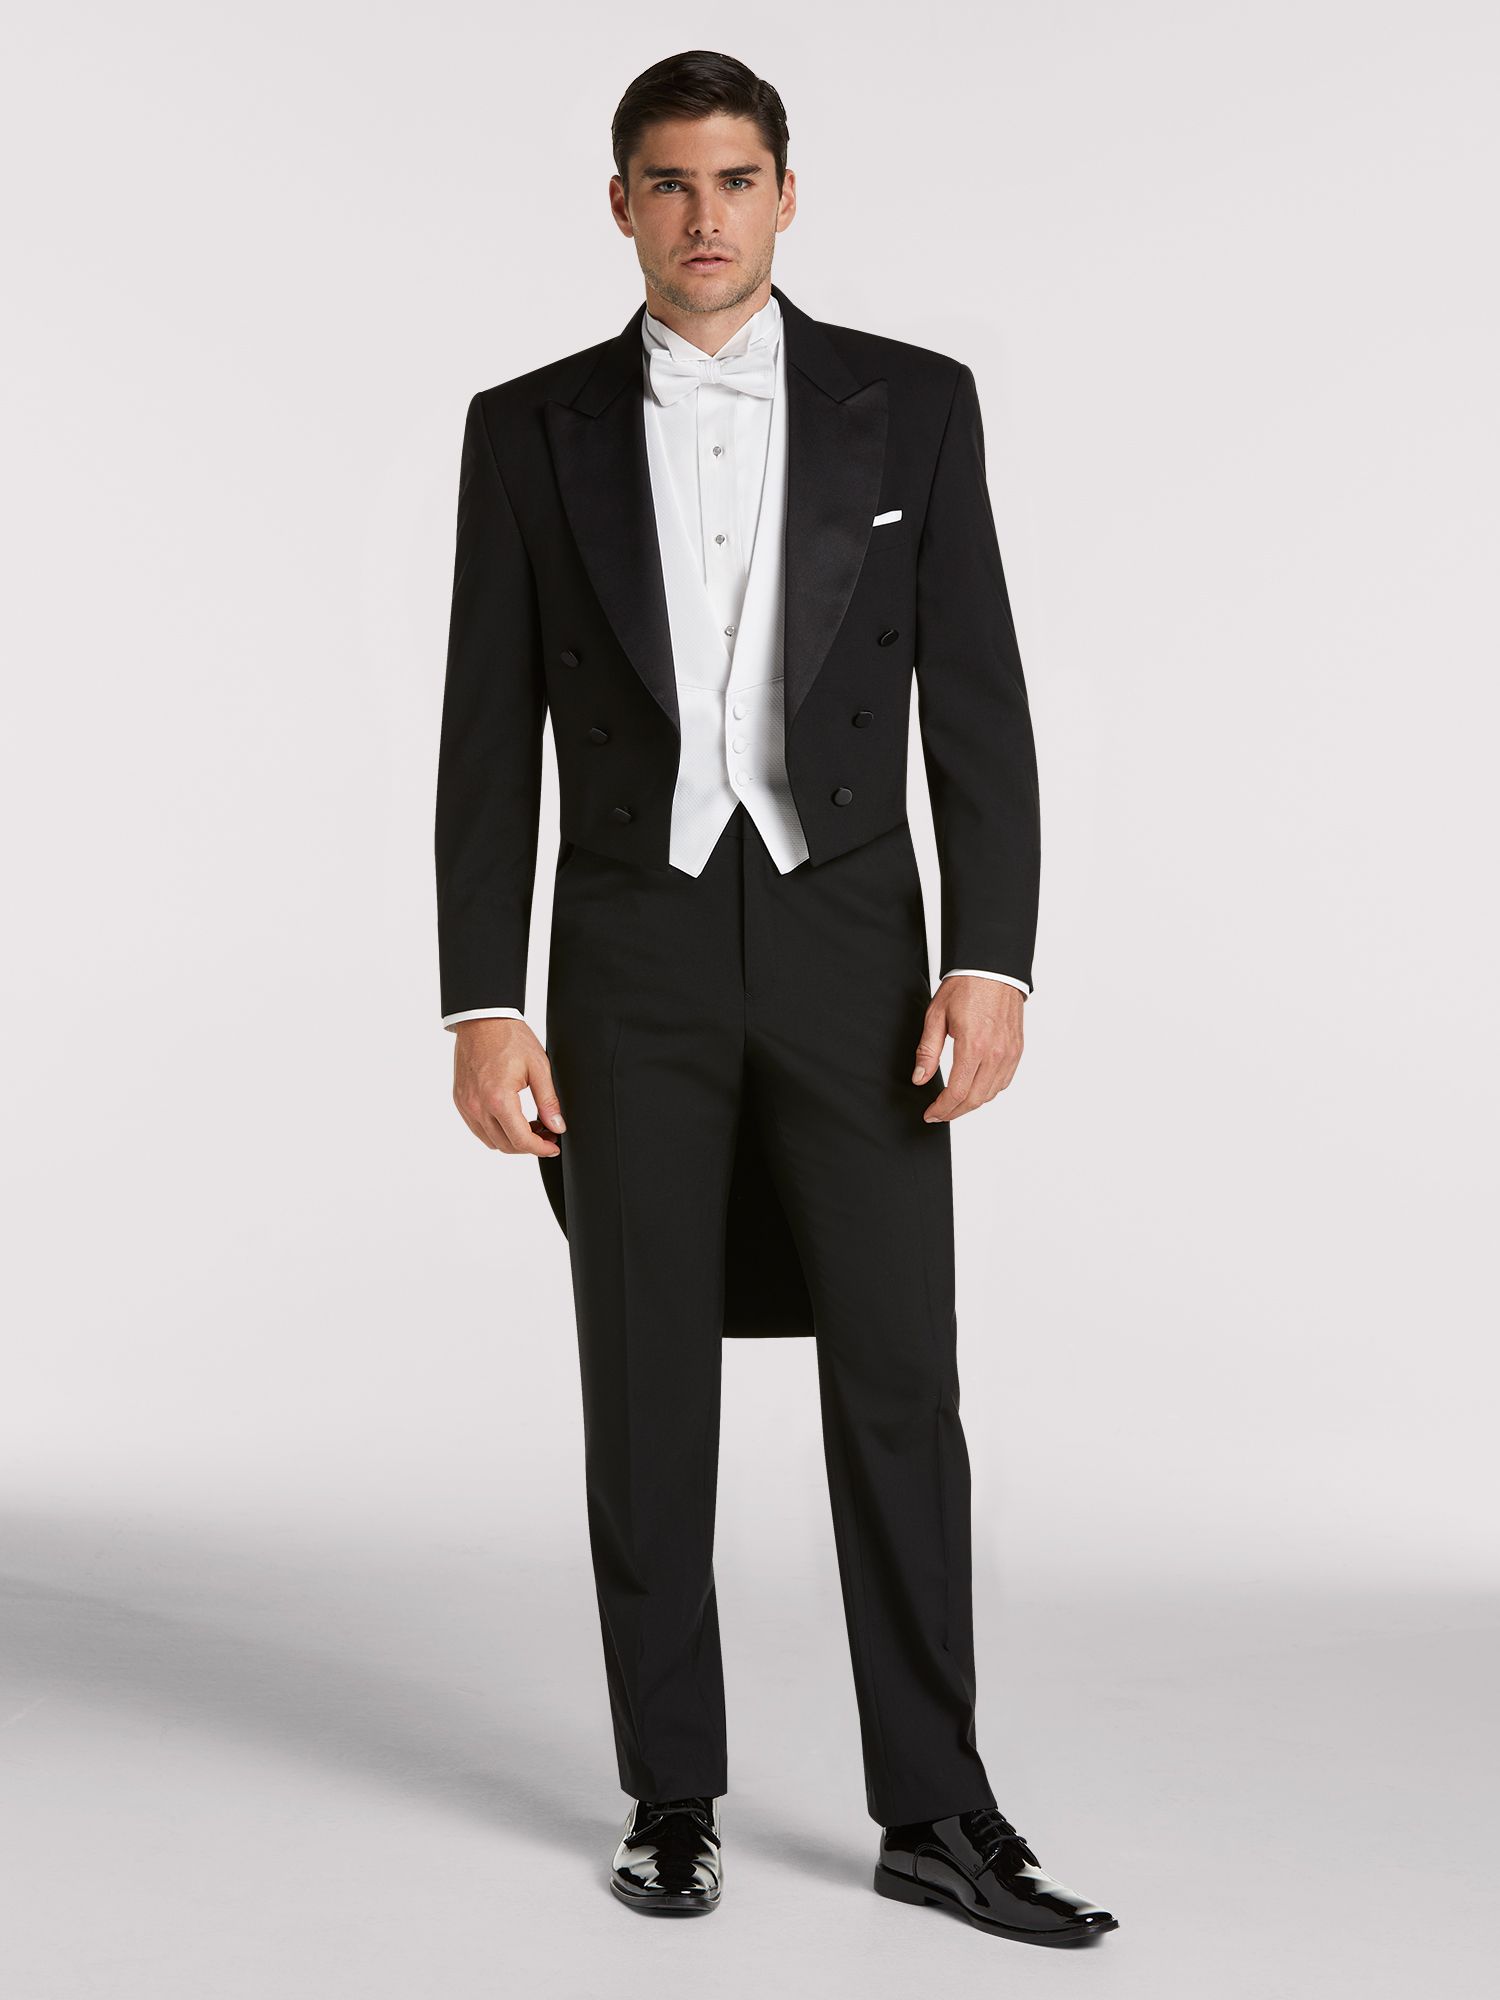 formal black suit